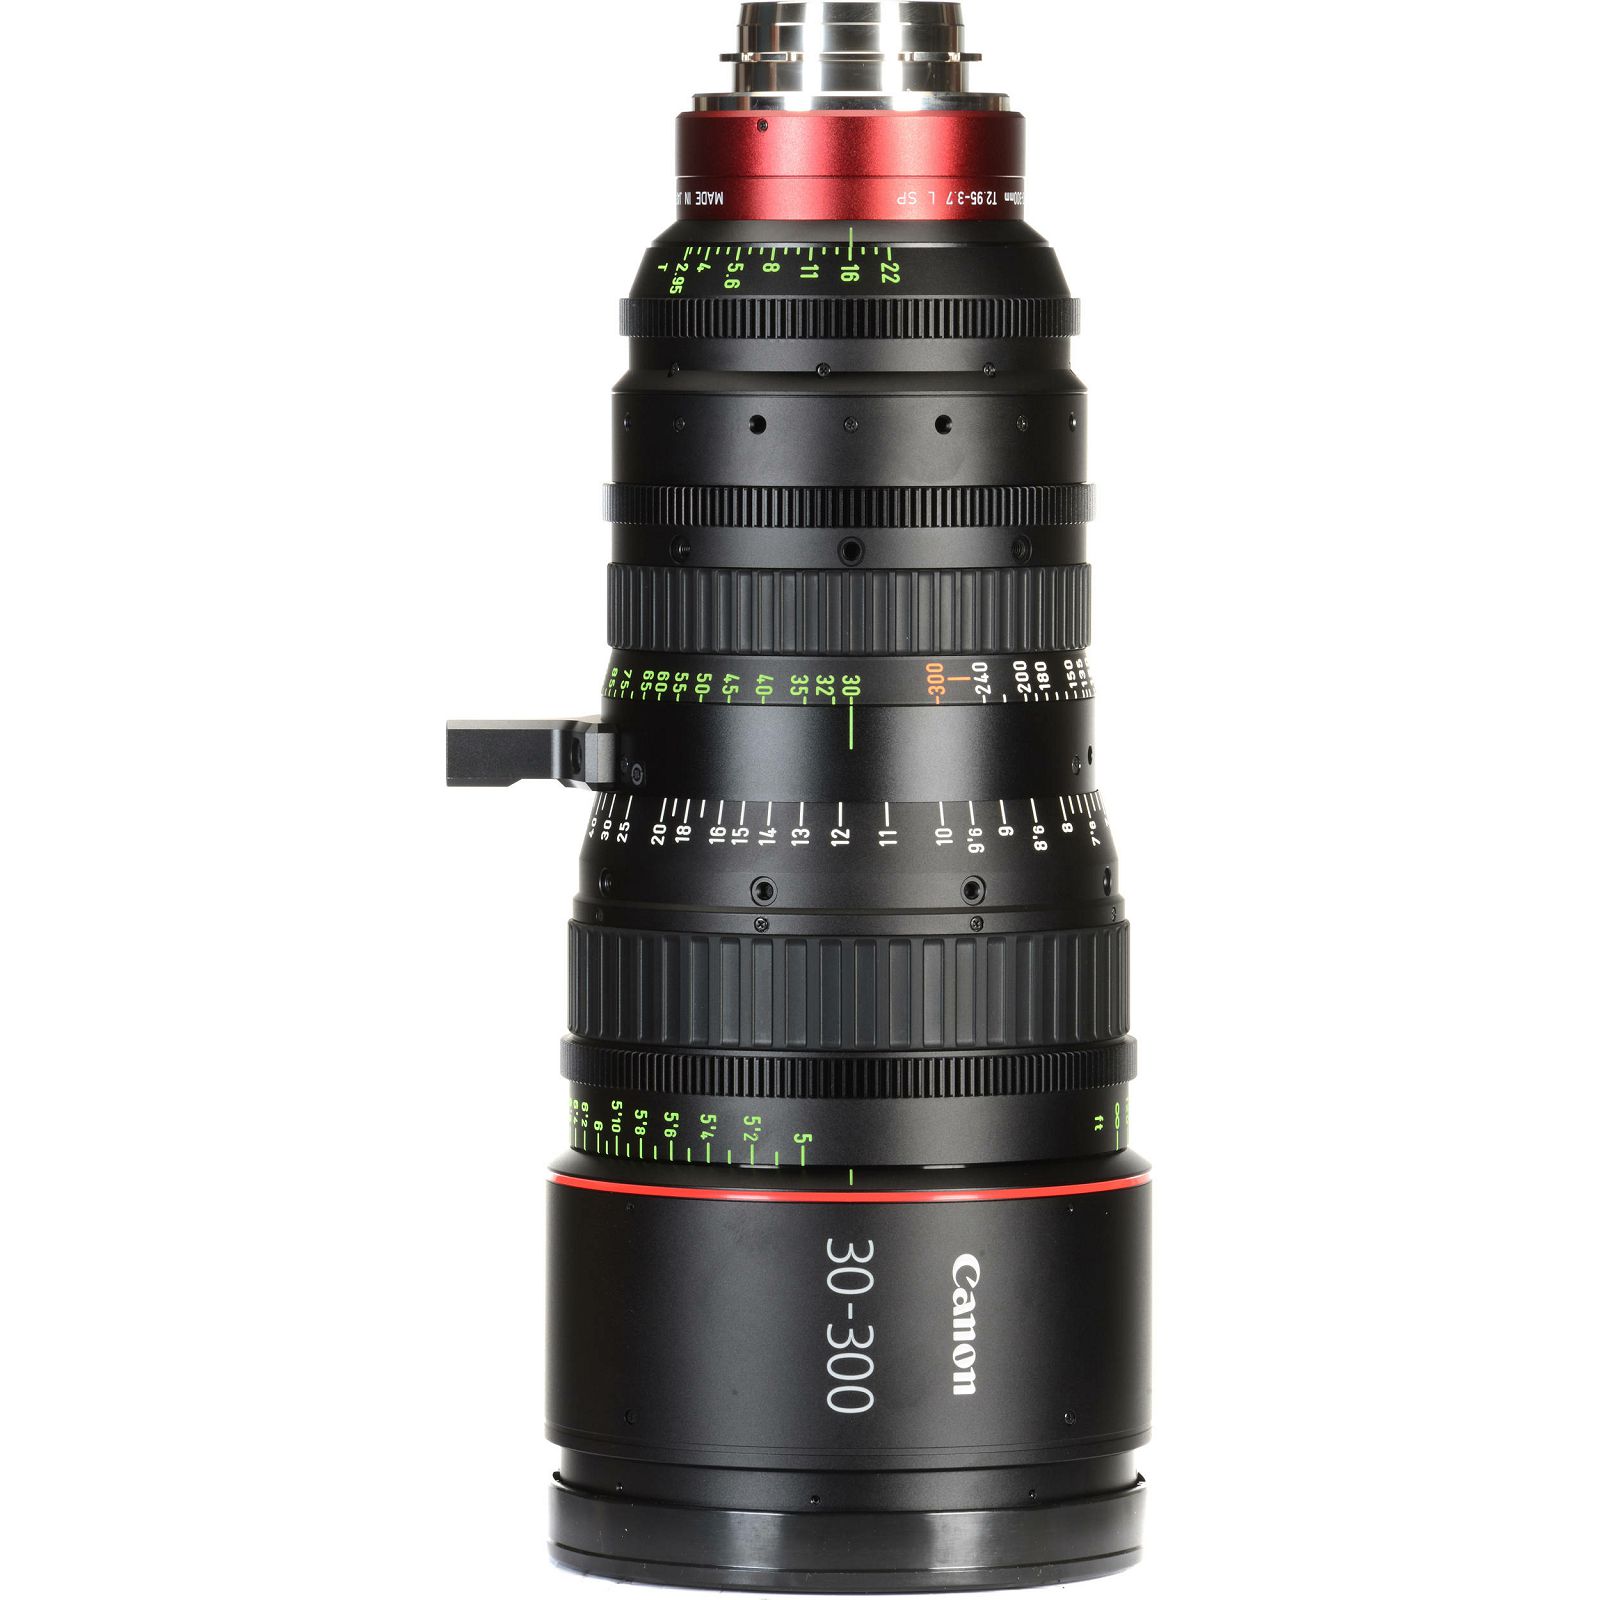 Canon CN-E 30-300mm T2.95-3.7 L SP Telephoto Cinema Zoom Cine Lens telefoto filmski objektiv PL Mount (6142B003AC)